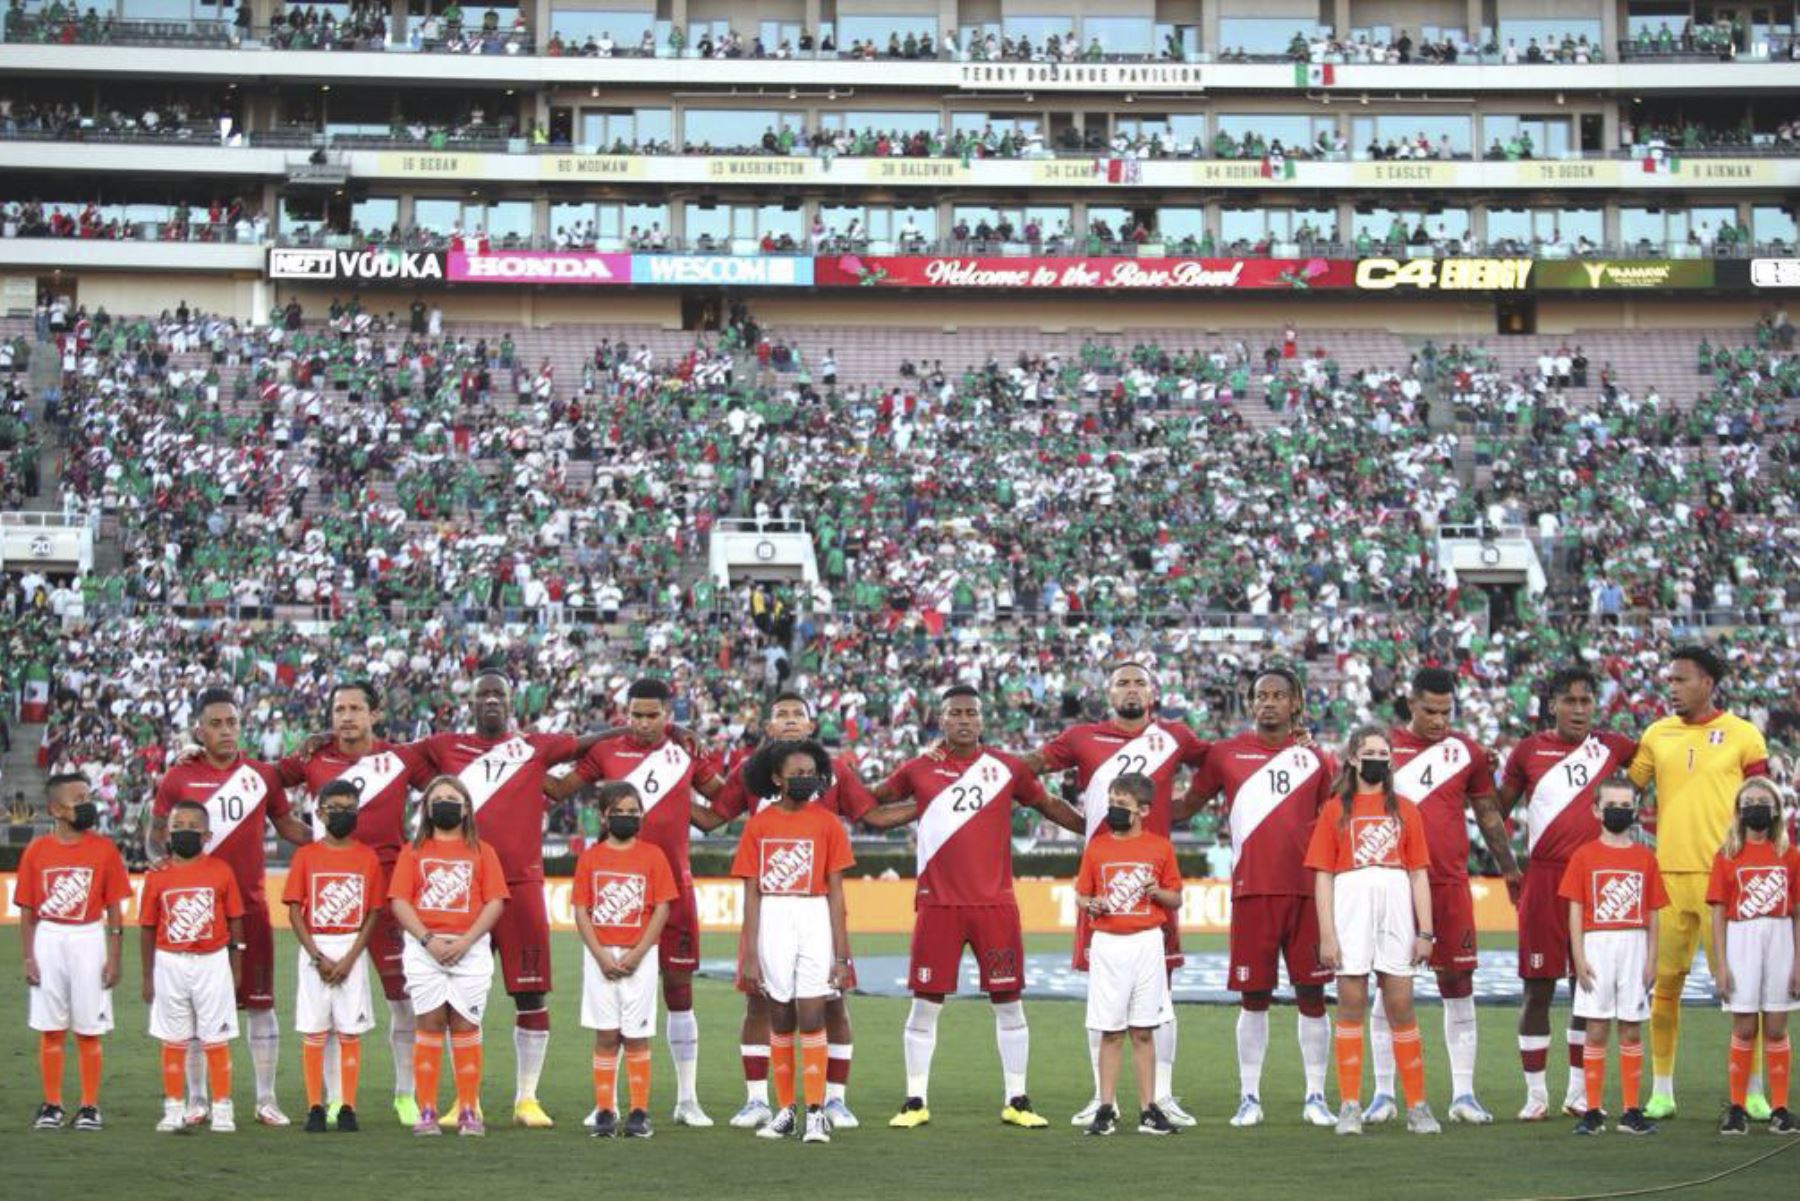 Perú enfrenta a México en partido amistoso que se disputa en el Rose Bowl Stadium de Pasadena, en California, Estados Unidos. Foto: FPF